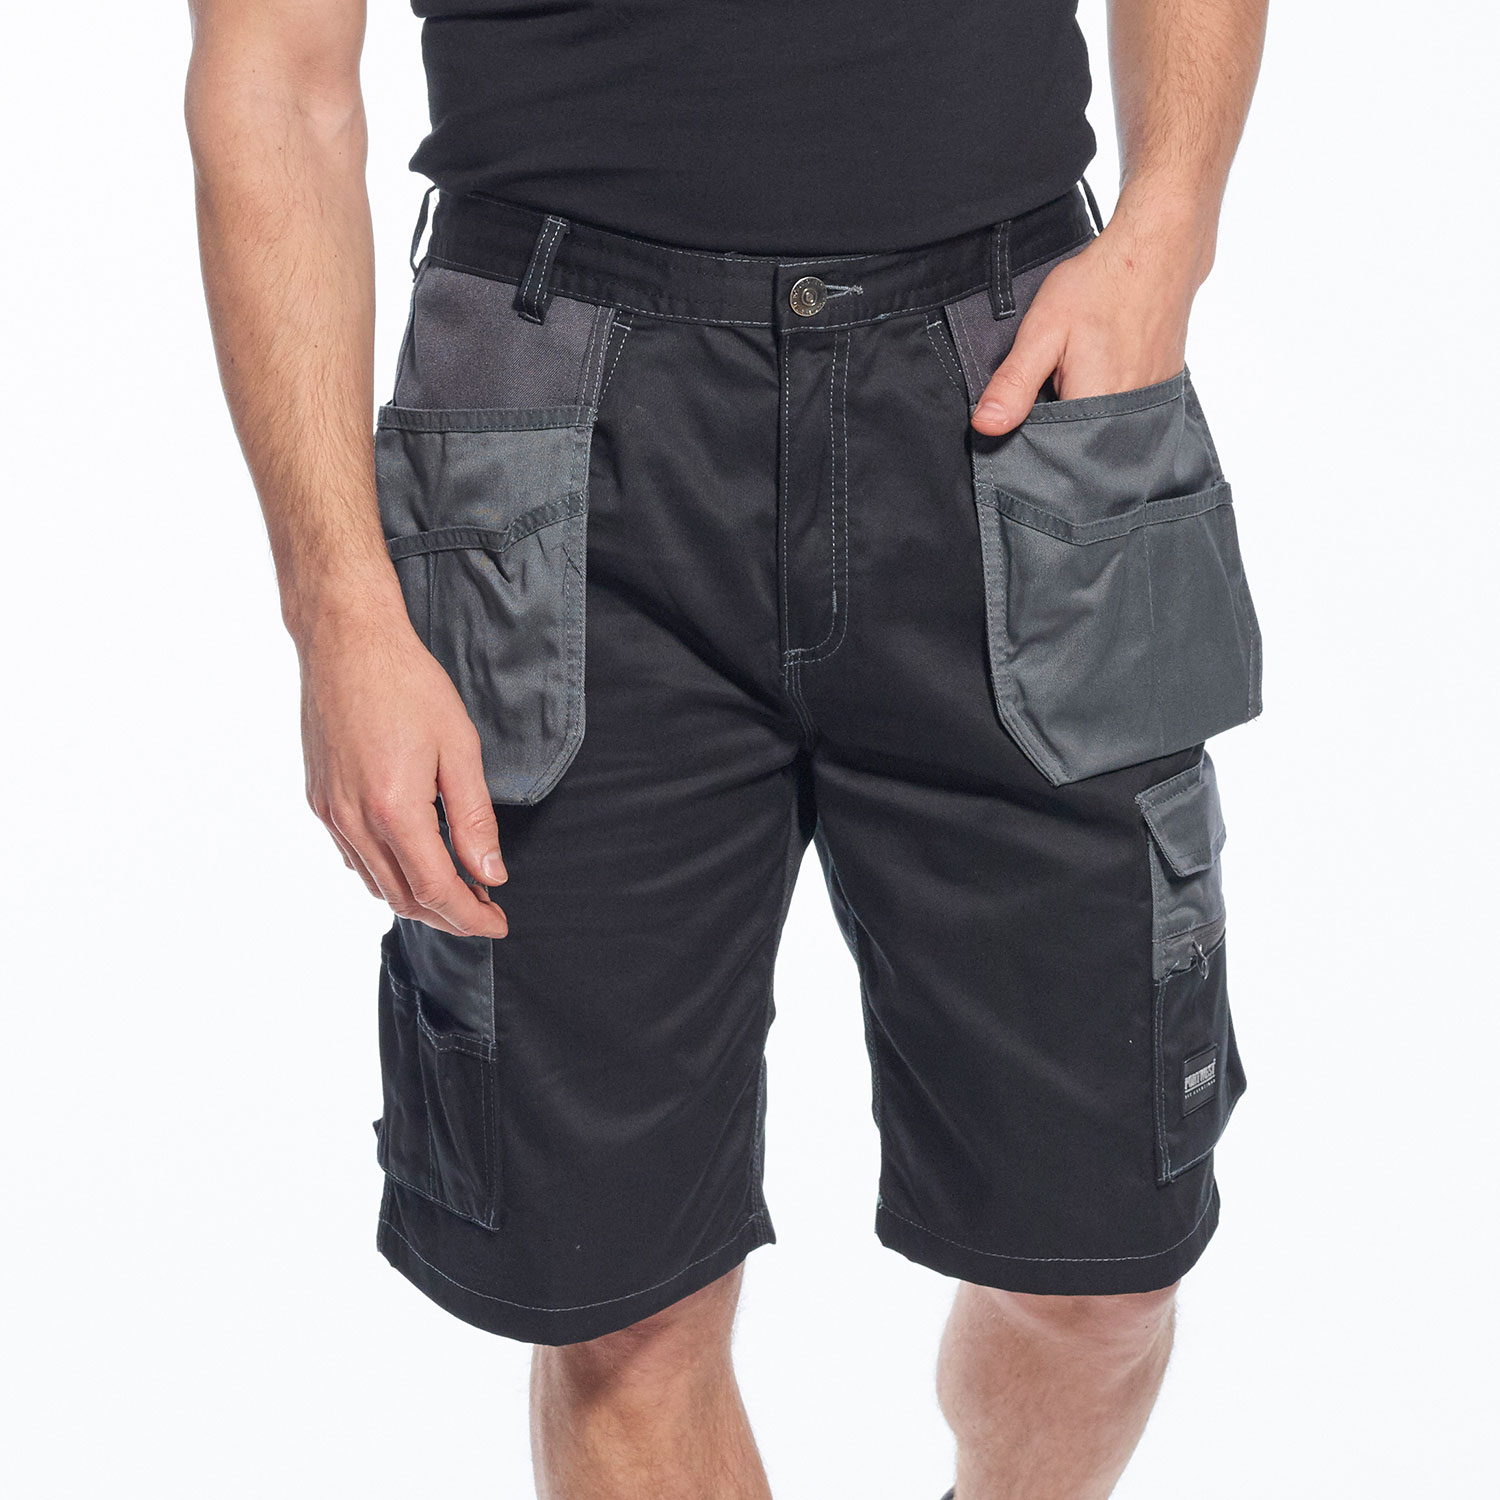 Portwest Holster Shorts - Black/Grey | Metal Fabrication Supplies